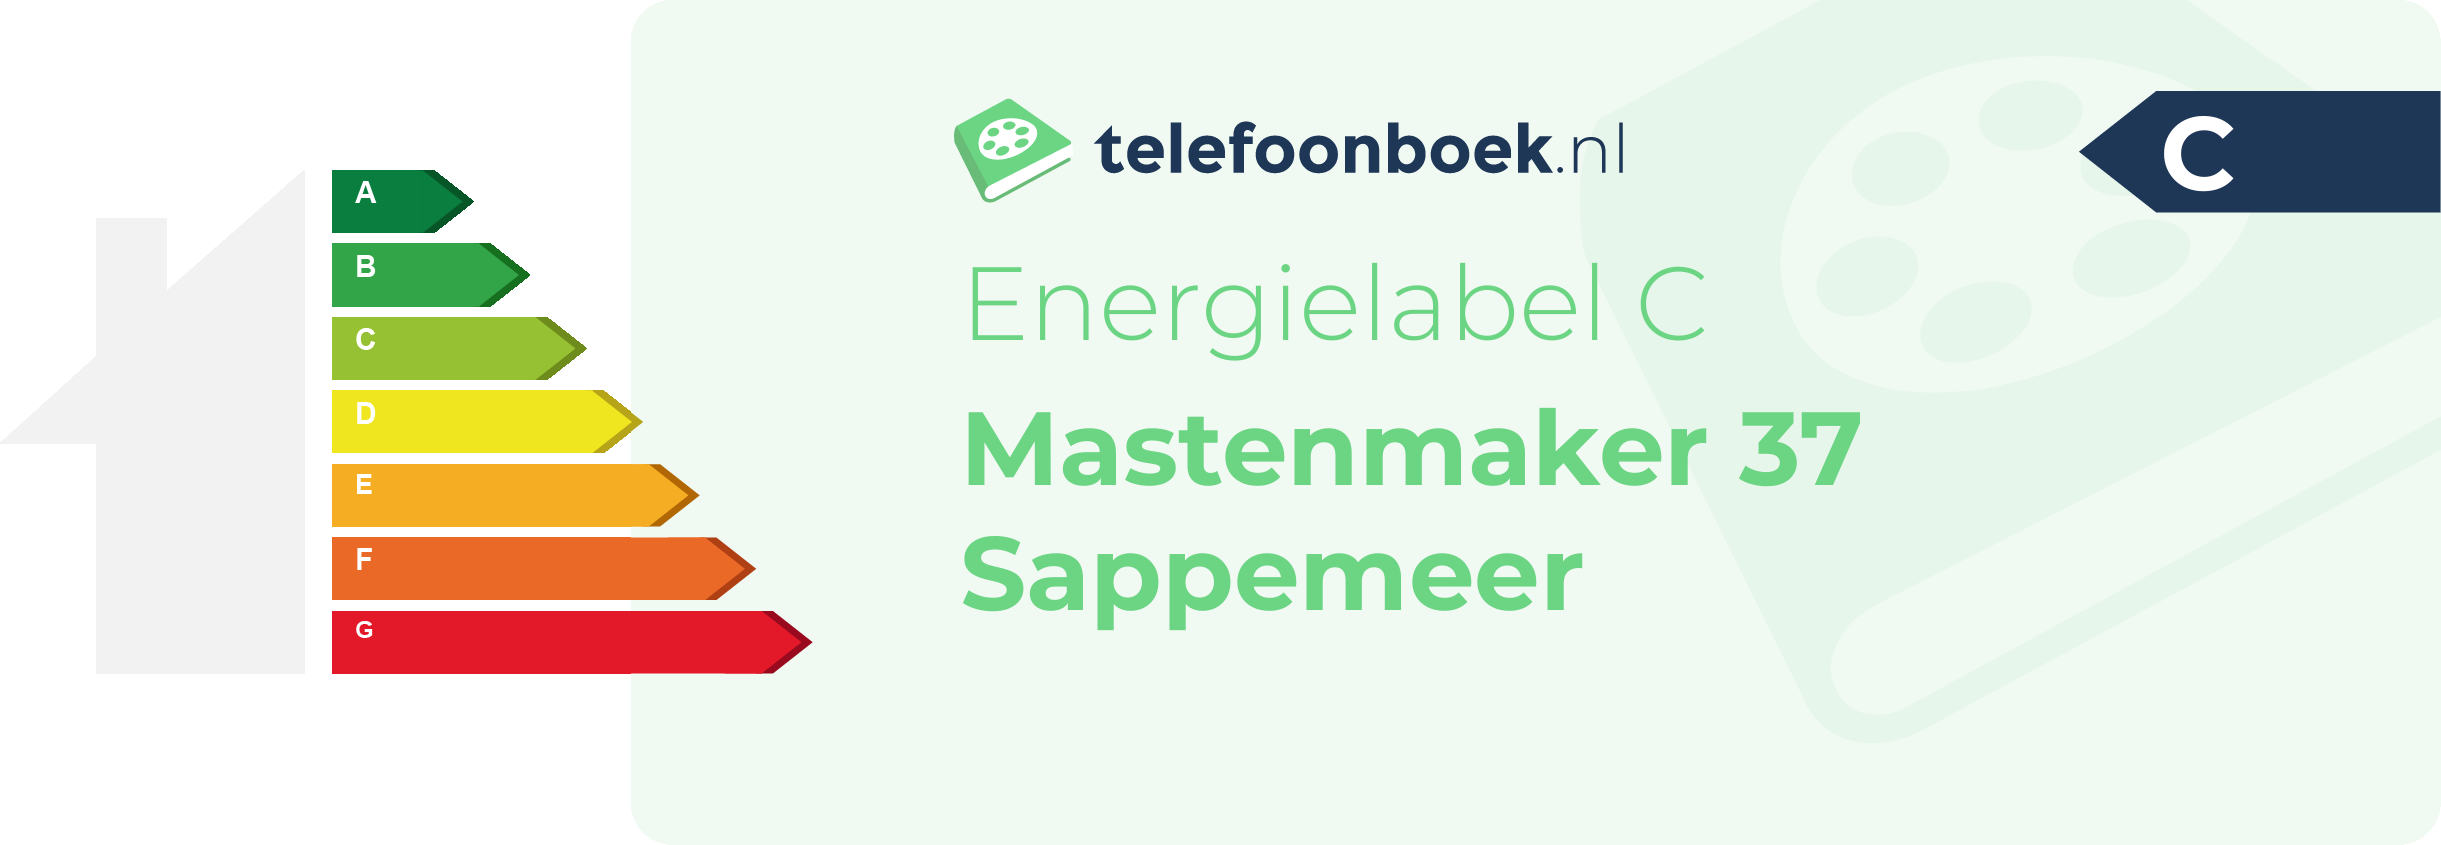 Energielabel Mastenmaker 37 Sappemeer